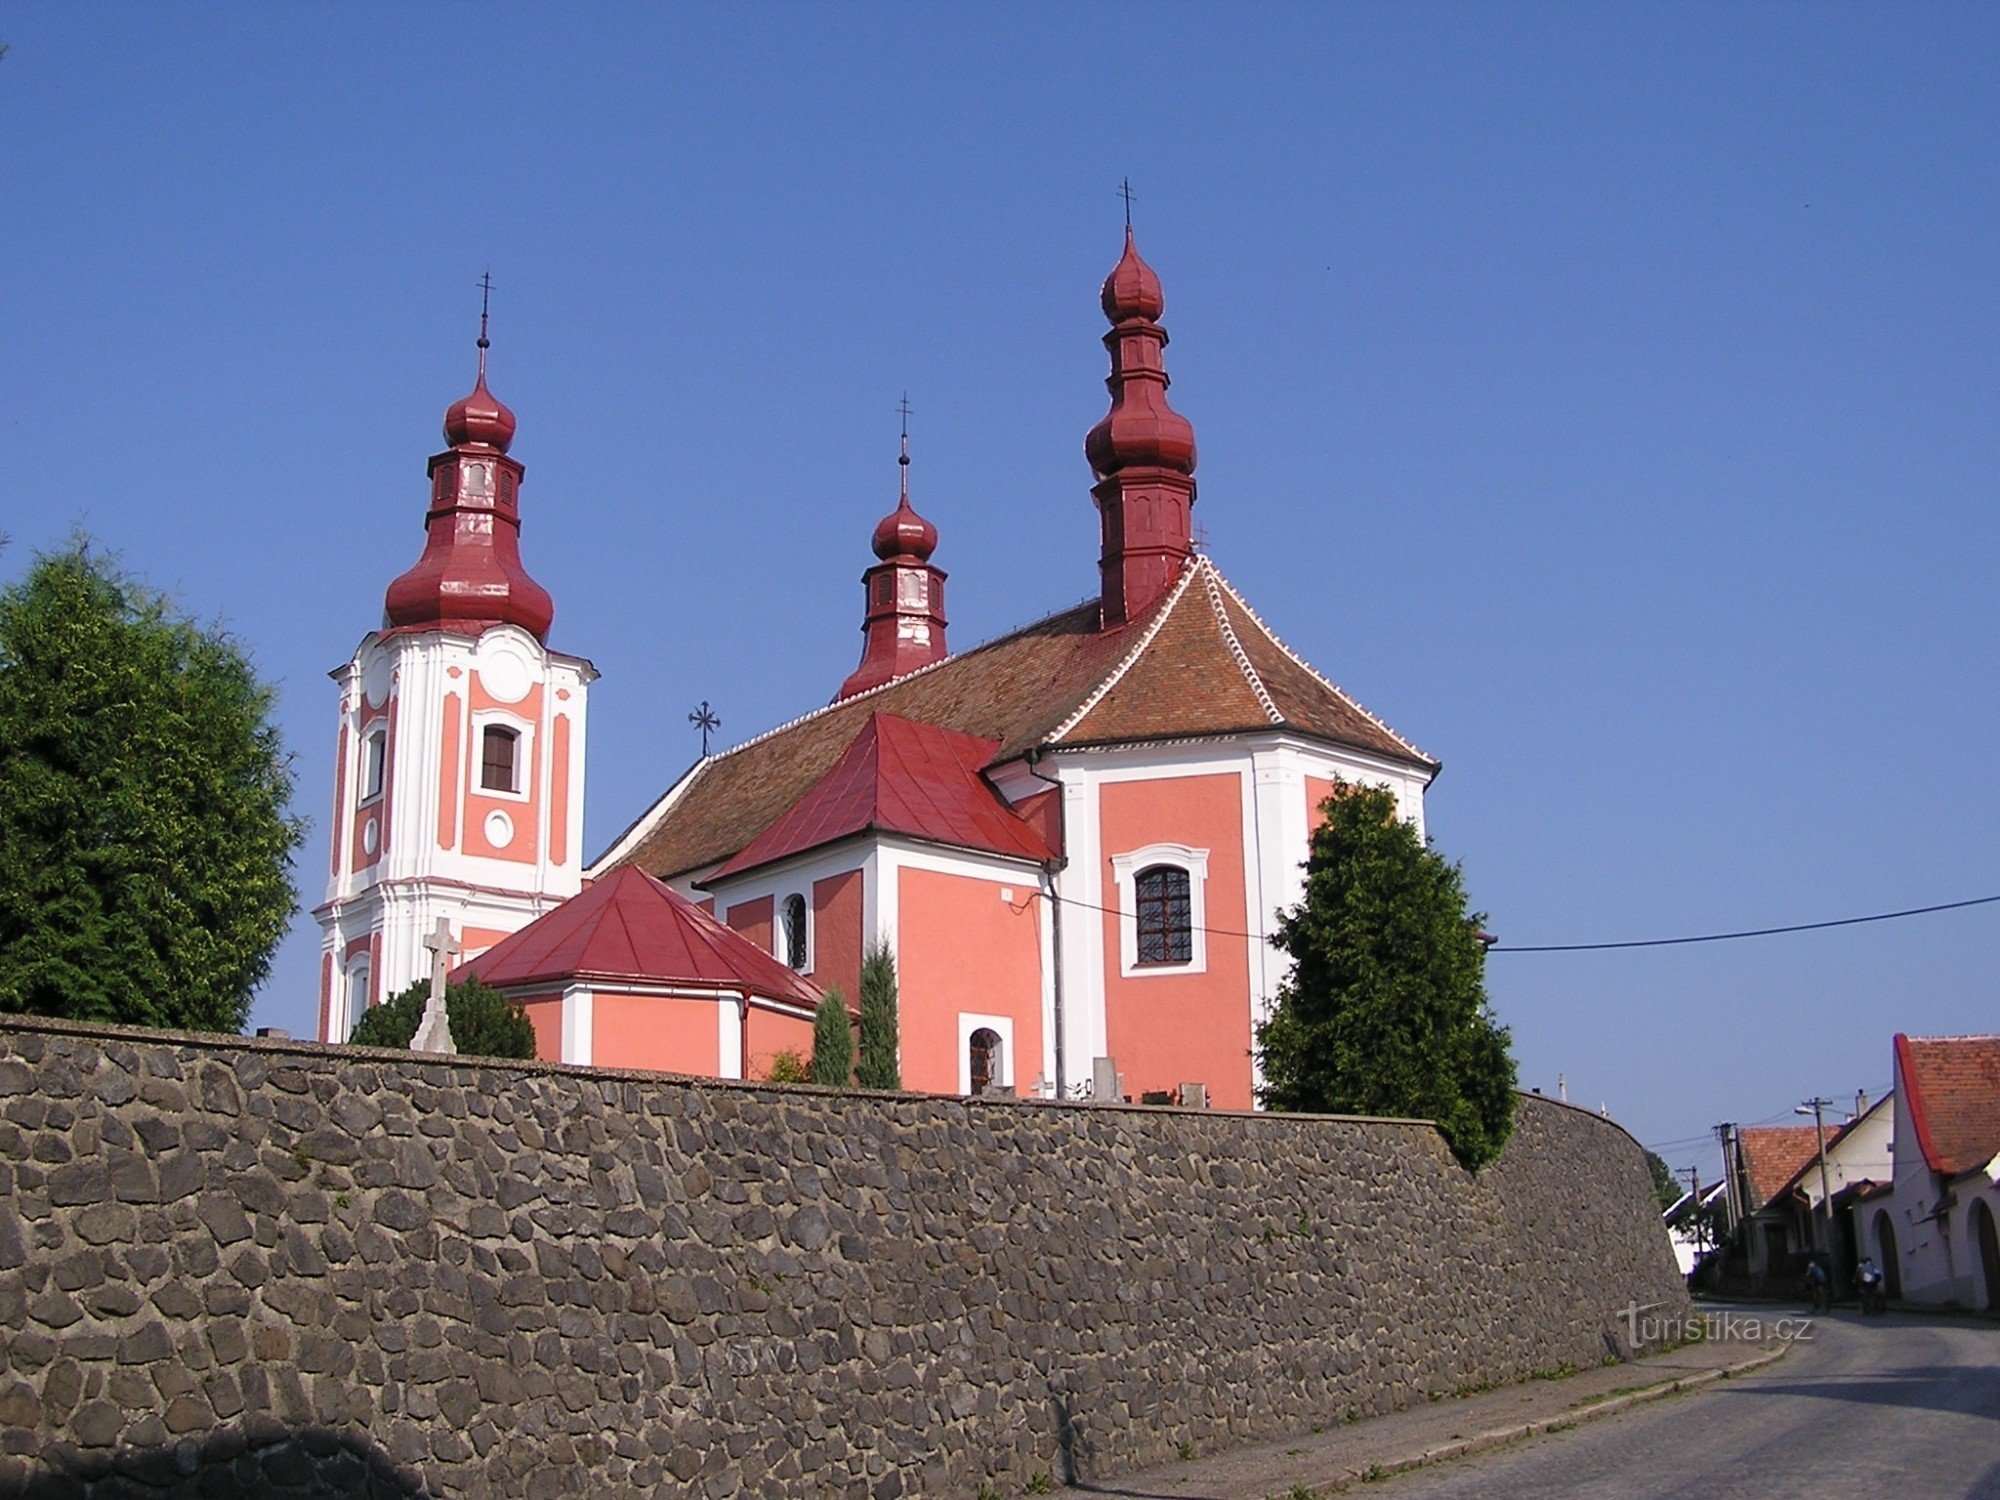 Biserica Sf. Bartolomeu din Rozsochy - 3.8.2003 august XNUMX